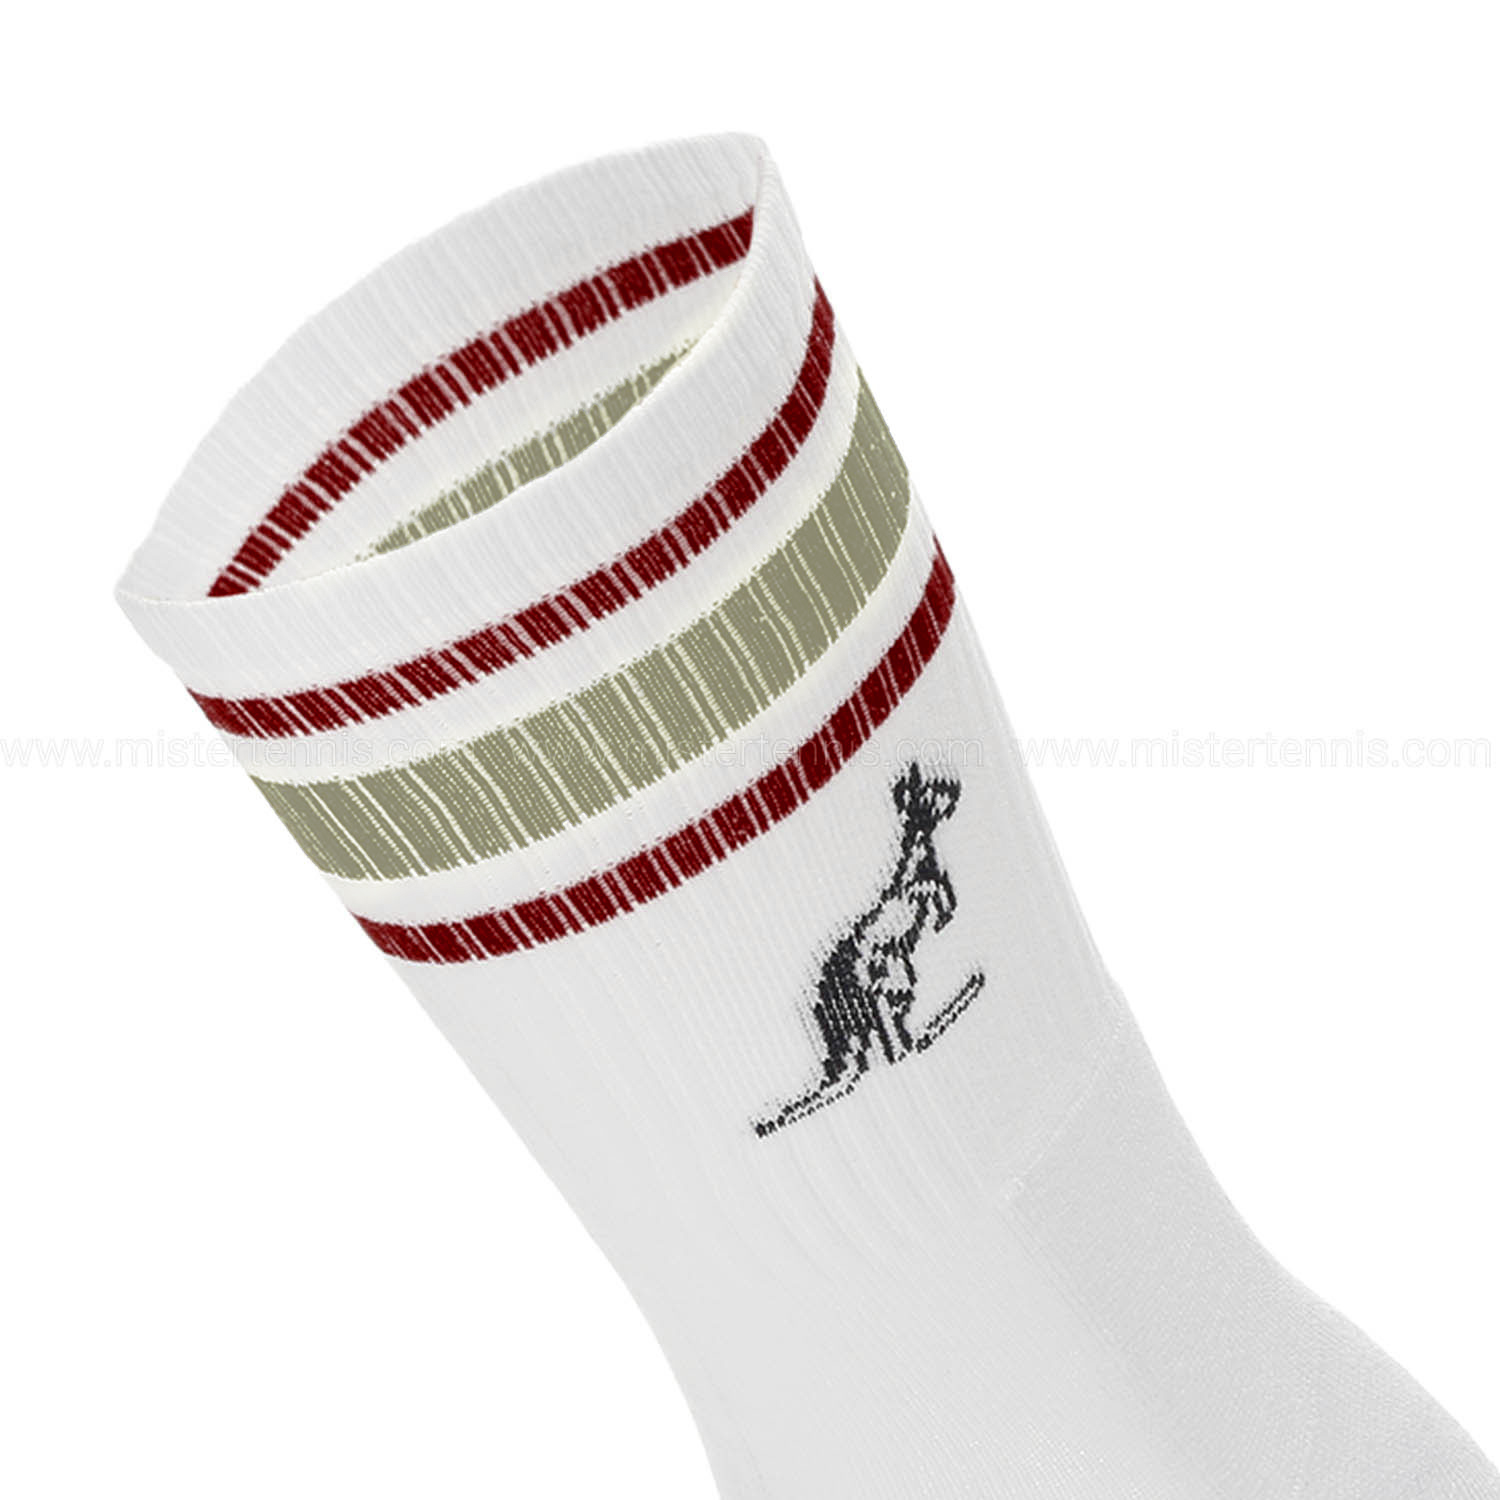 Australian Stripes Socks - White/Multi Color